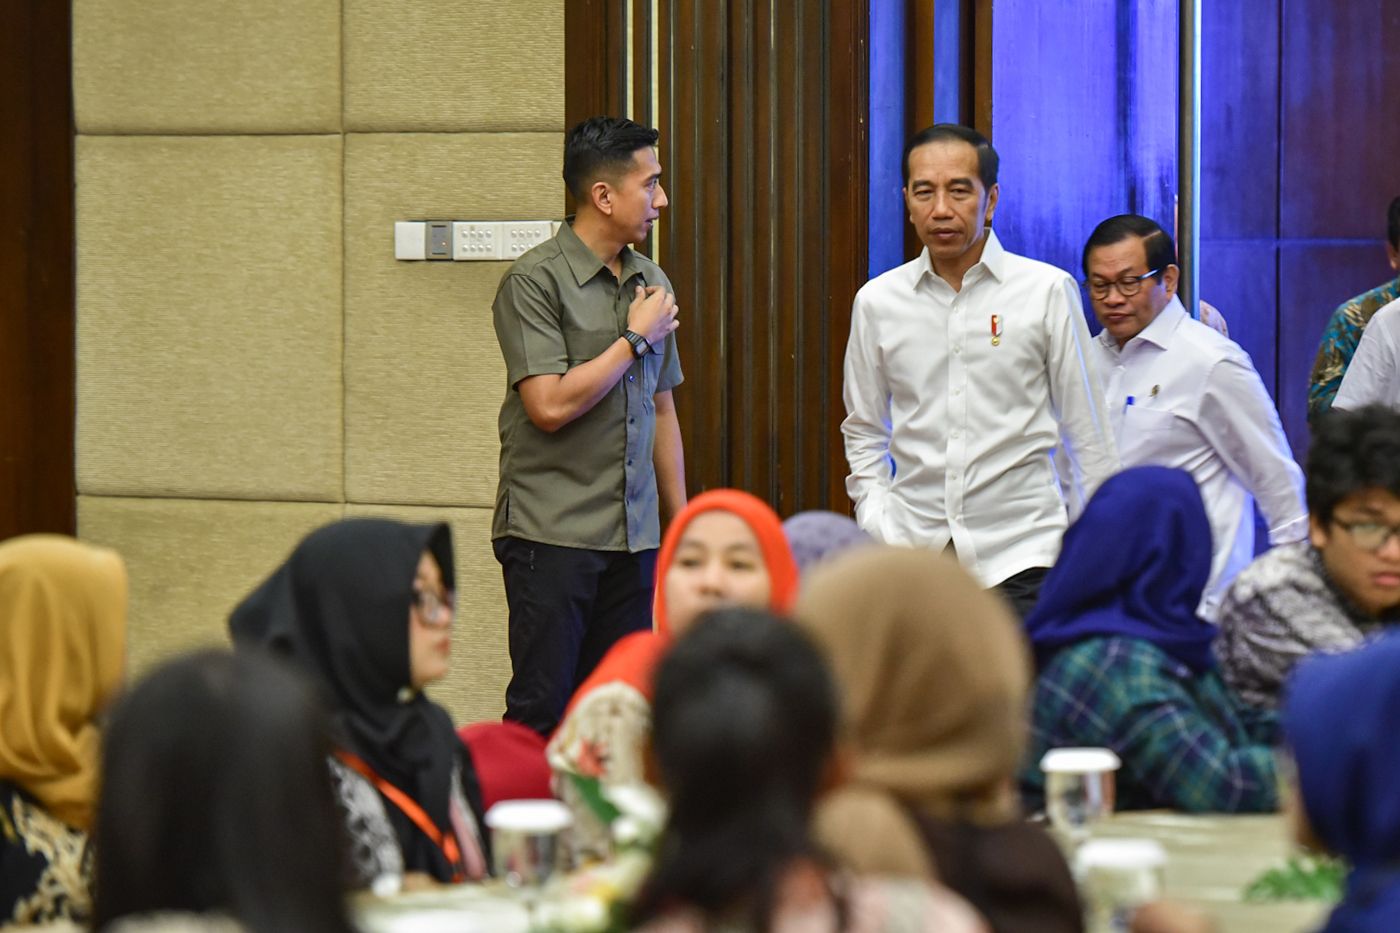 Ada Hakim dan Mantan KPK, Presiden Jokowi Pastikan Dewas KPK Diisi Nama-Nama Yang Baik